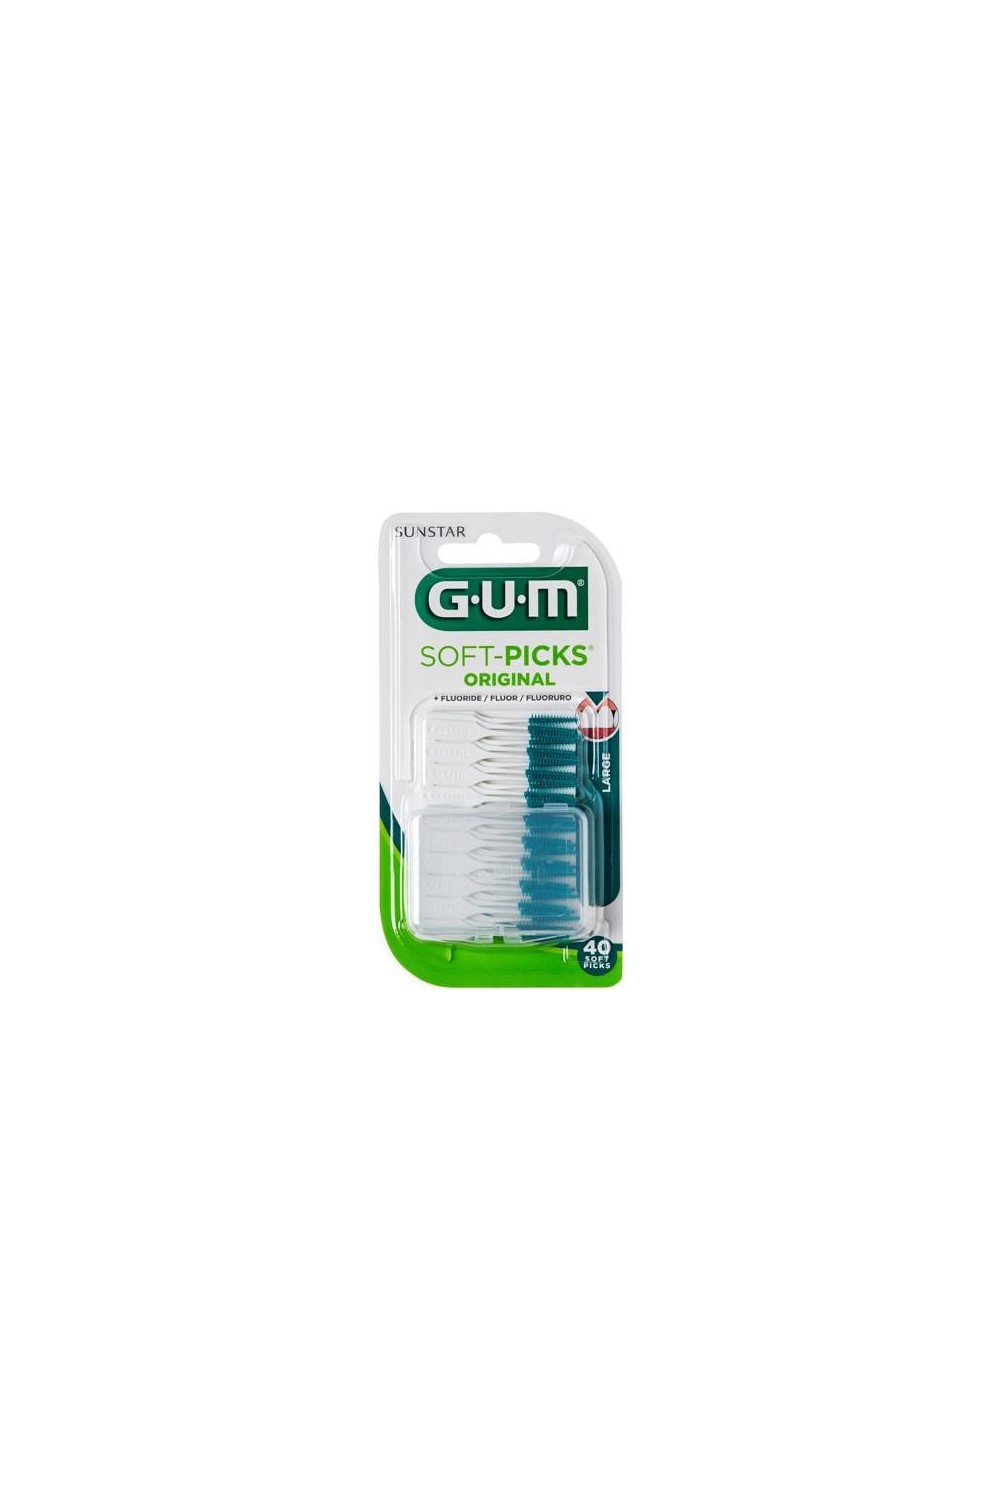 Sunstar Gum Soft Picks Large 634 40 Units